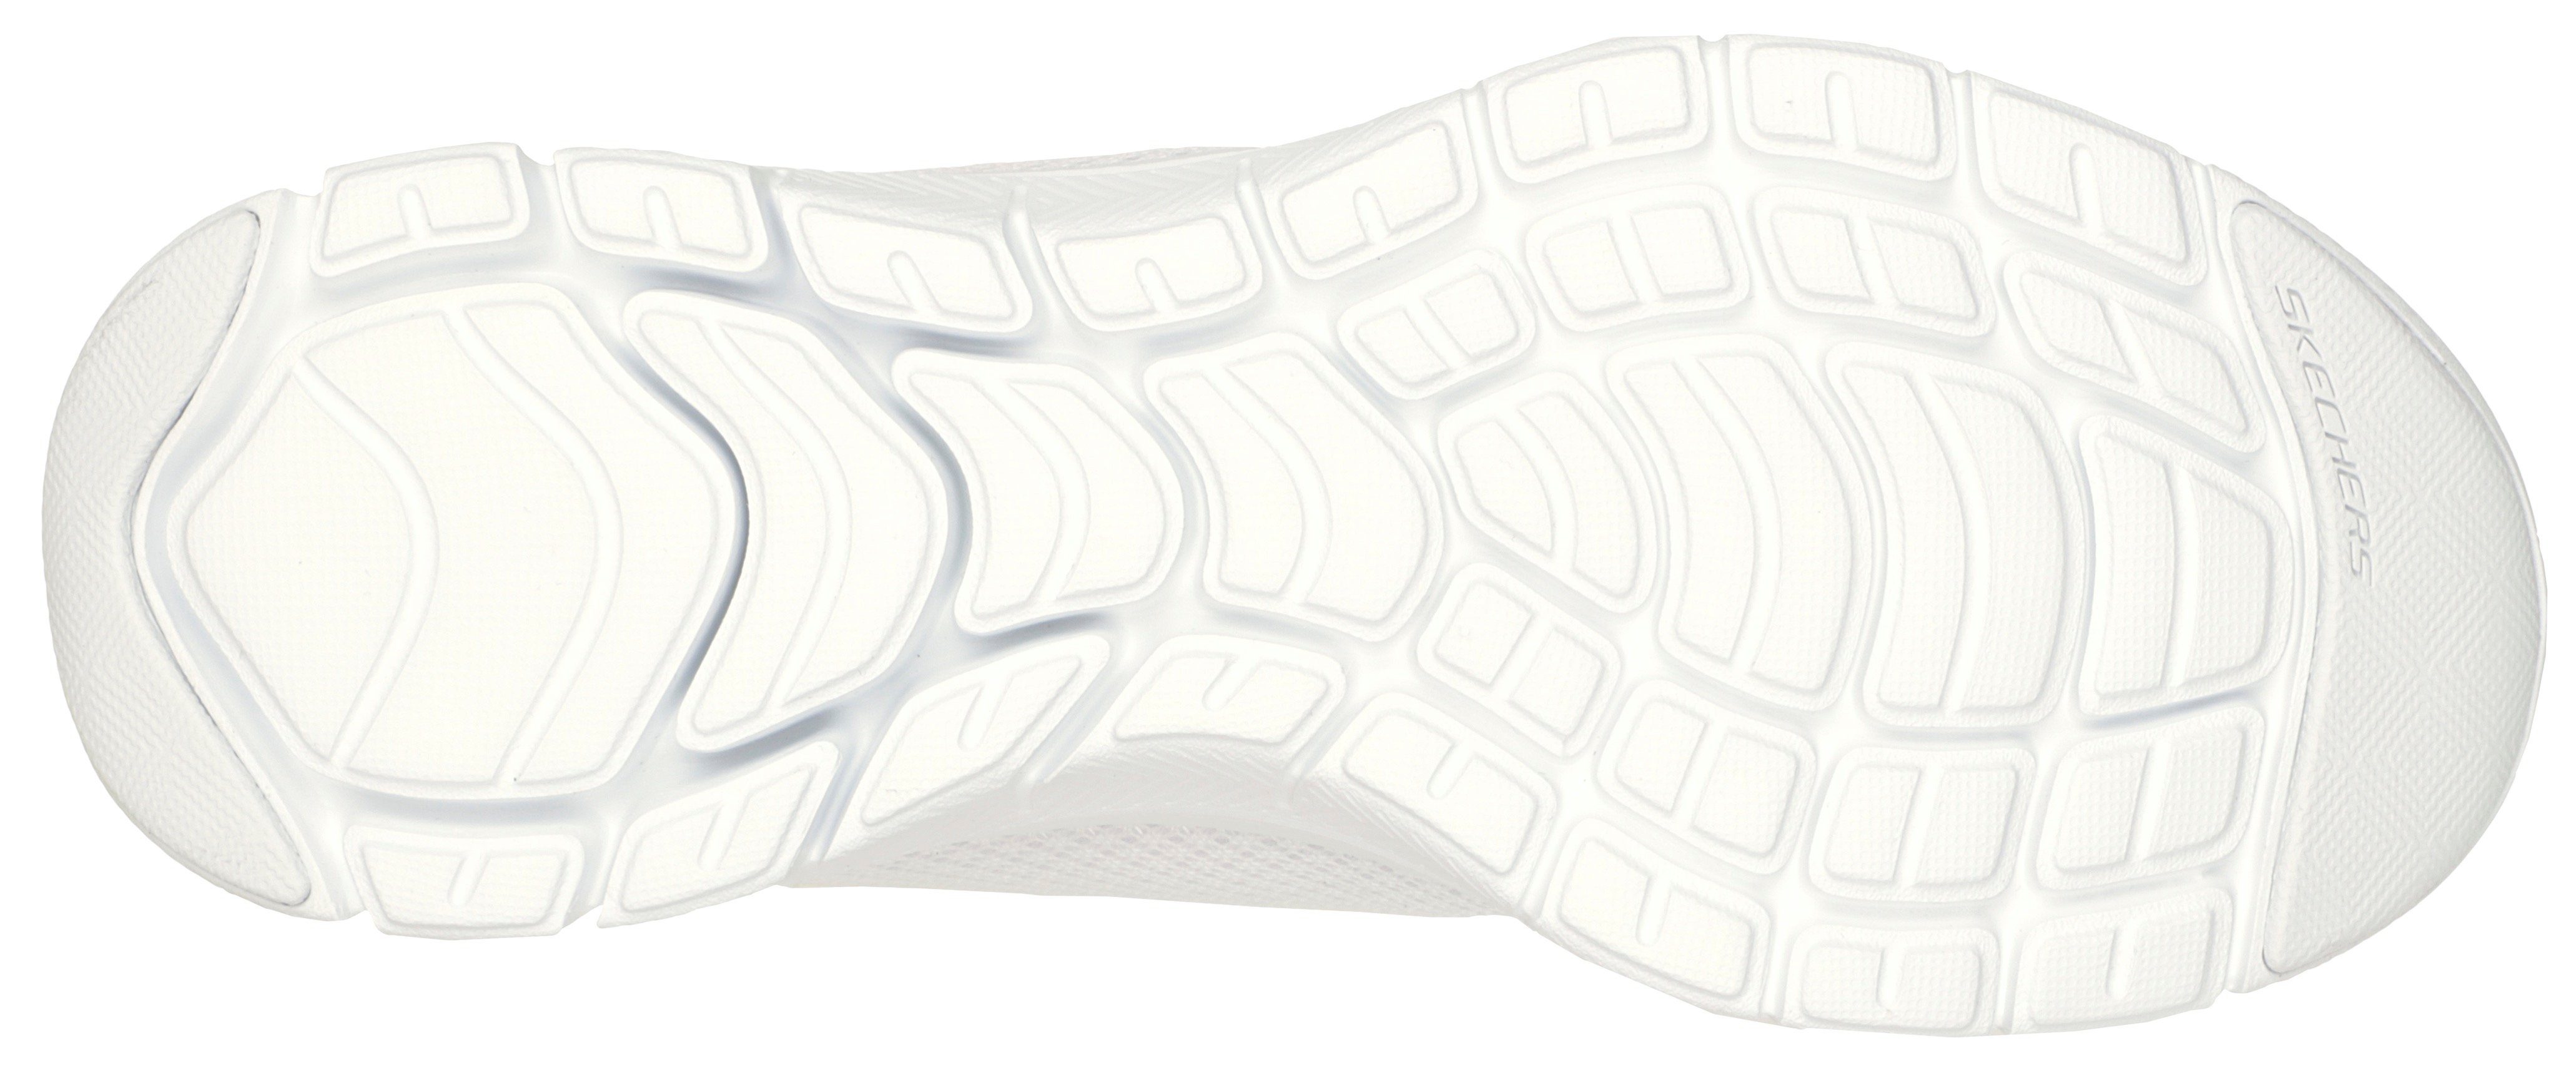 Ausstattung FLEX Skechers 4.0 Memory mit Sneaker VIEW BRILLINAT Foam offwhite Air-Cooled APPEAL